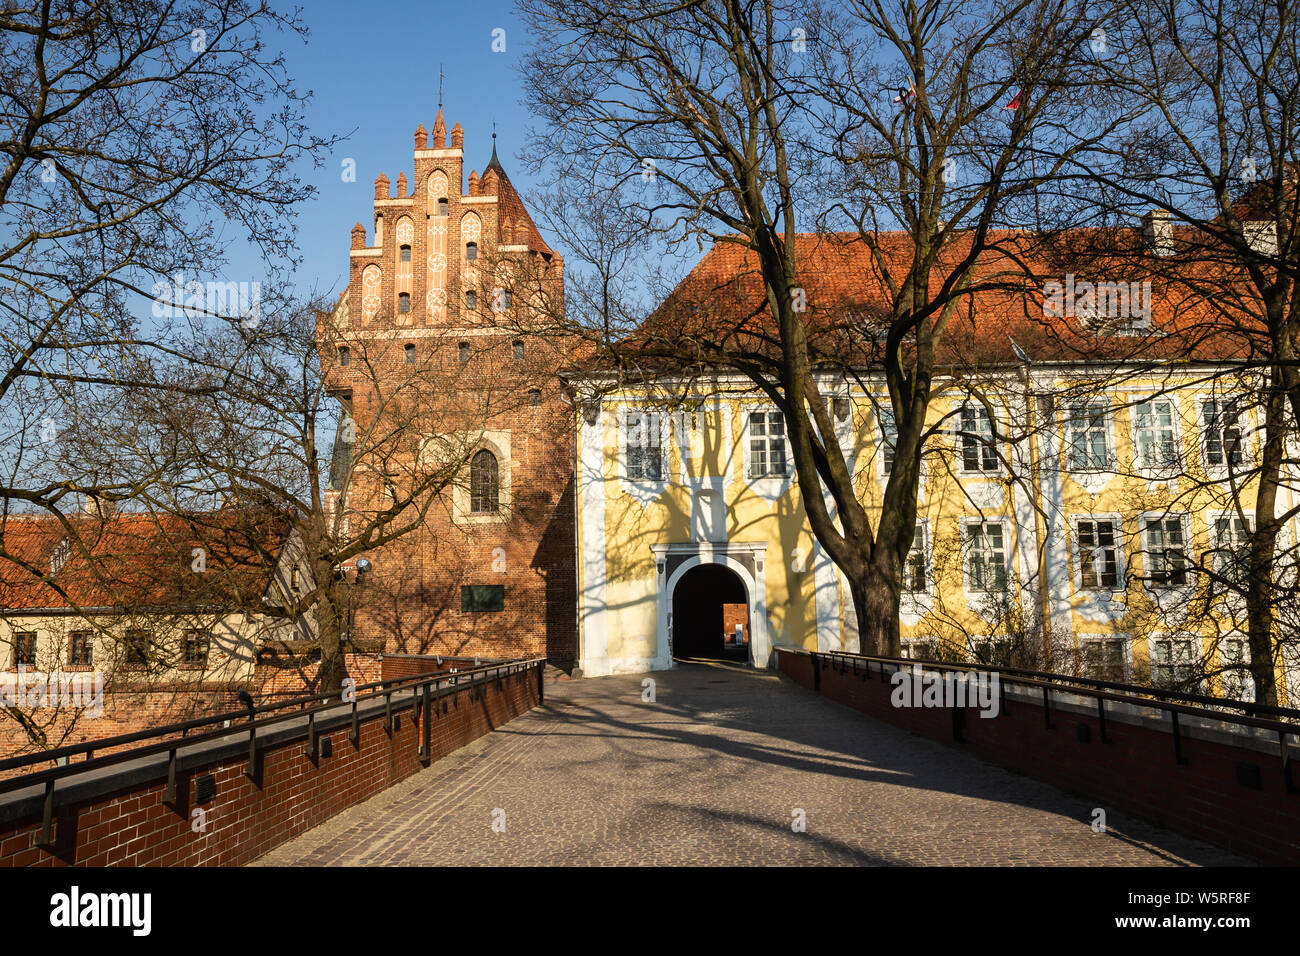 Medieval castle in Olsztyn, Poland Stock Photo